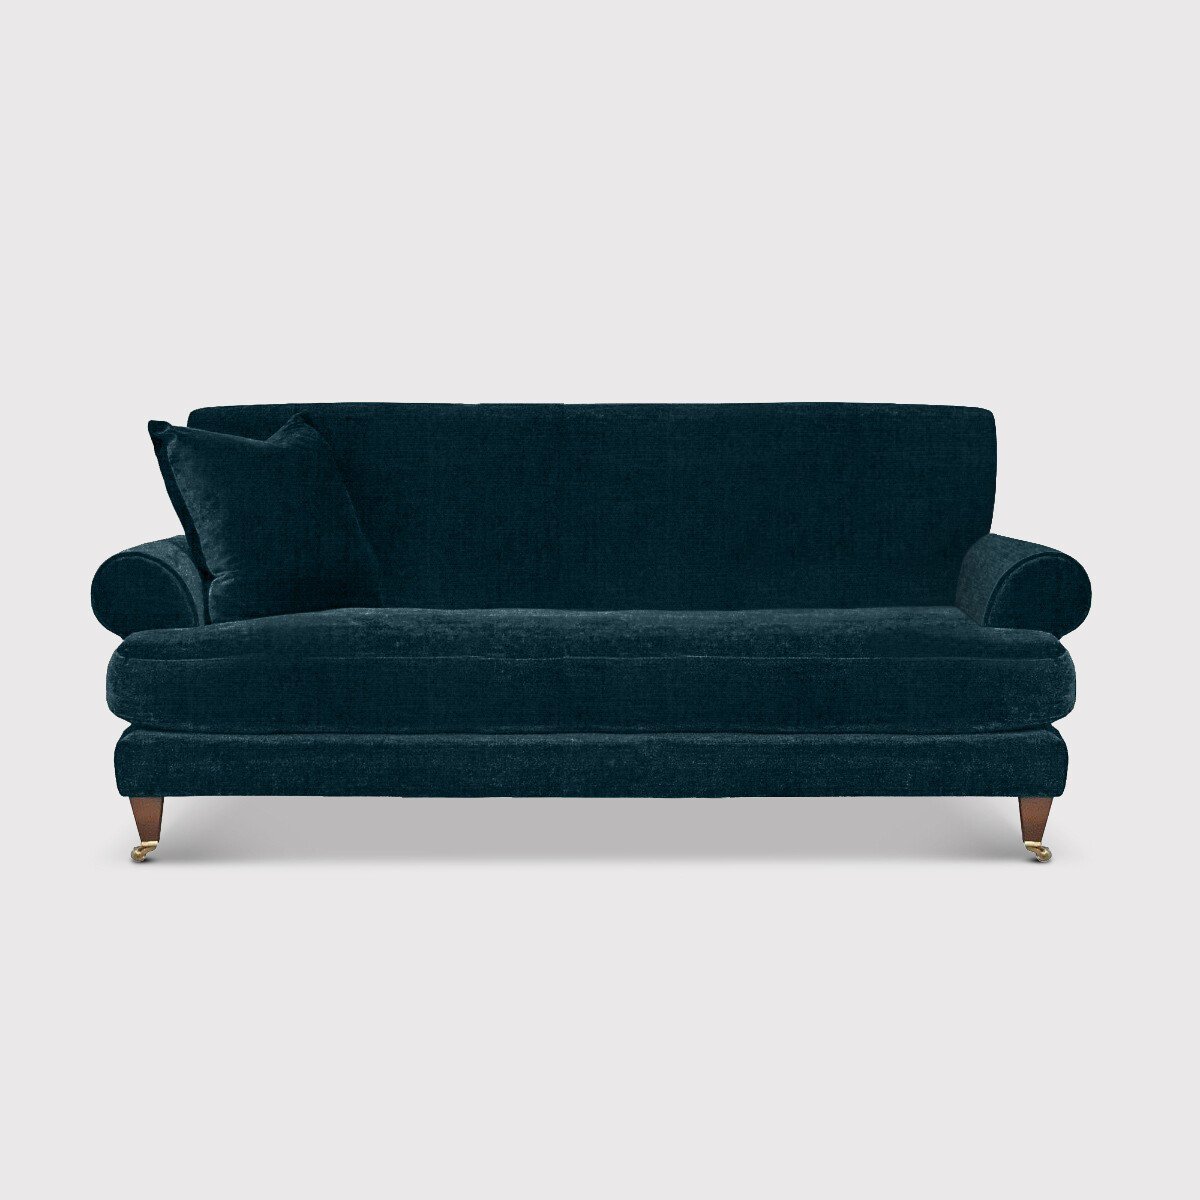 Fairlawn 2 Seater Sofa, Teal Fabric | Barker & Stonehouse